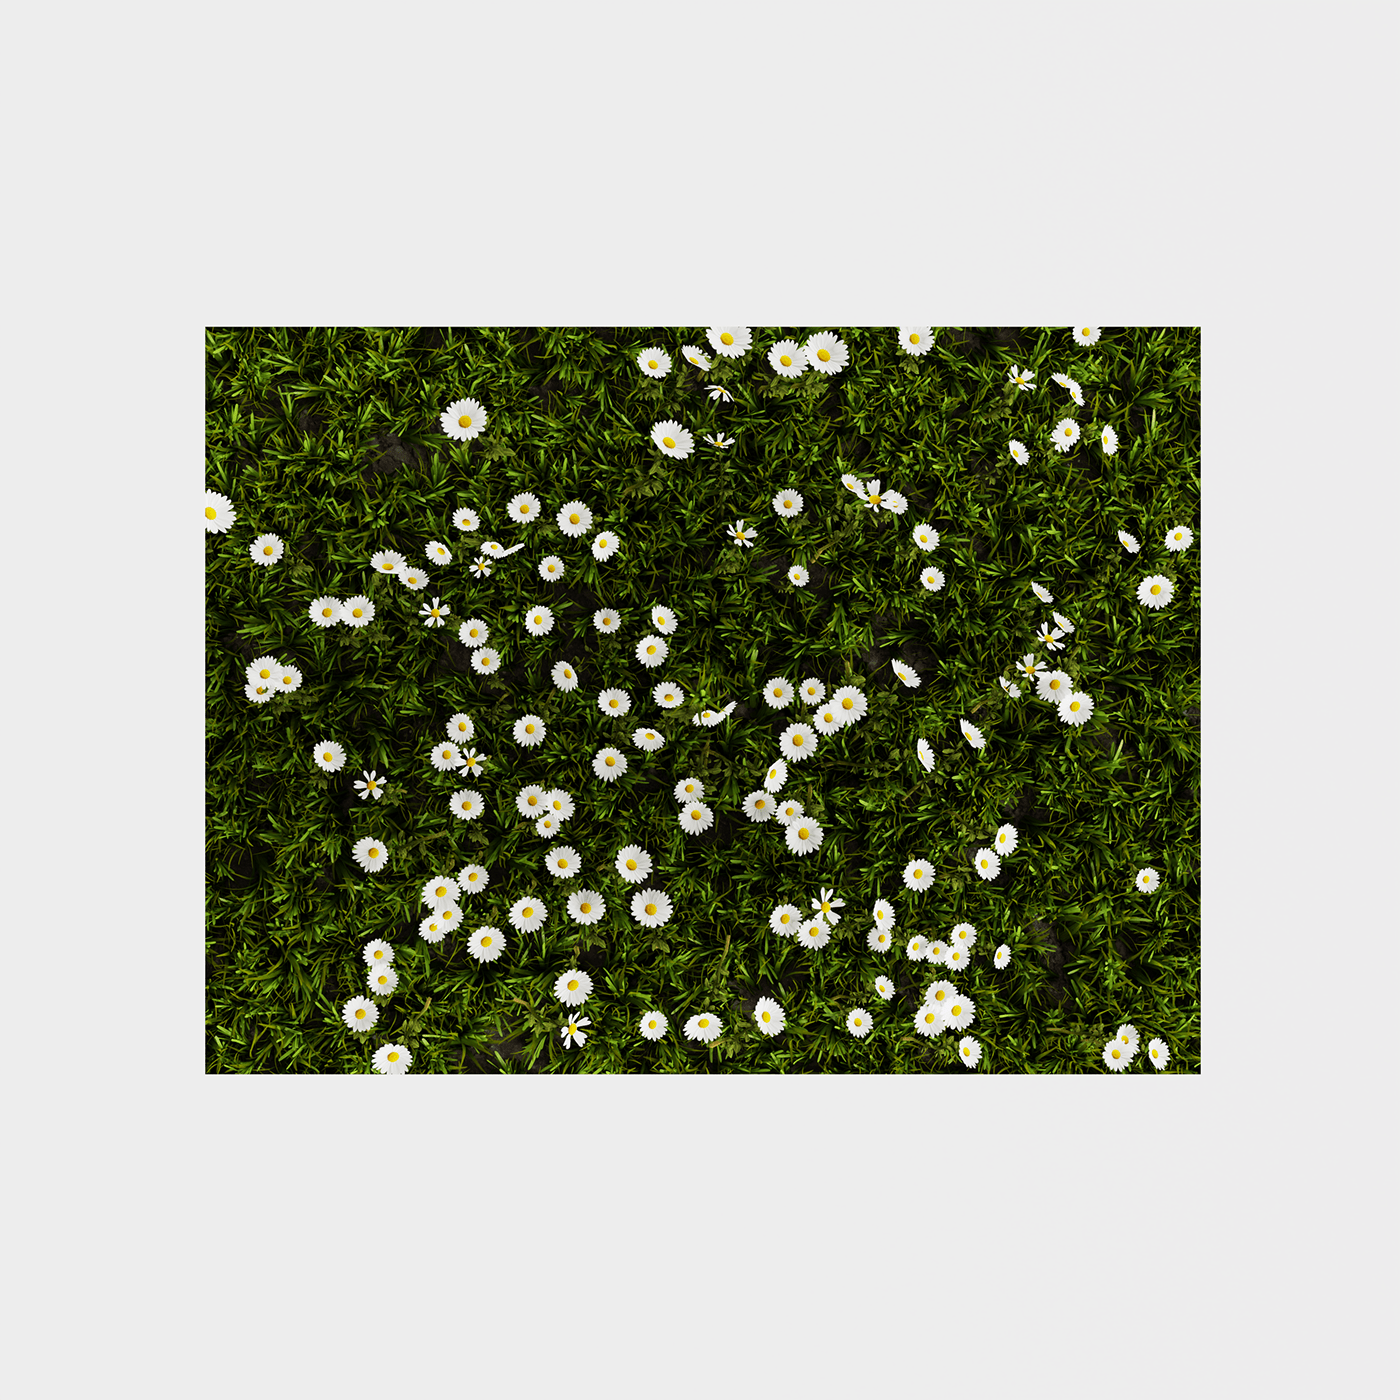 flower Nature meadow field summer grass blender 3D minimal camomile